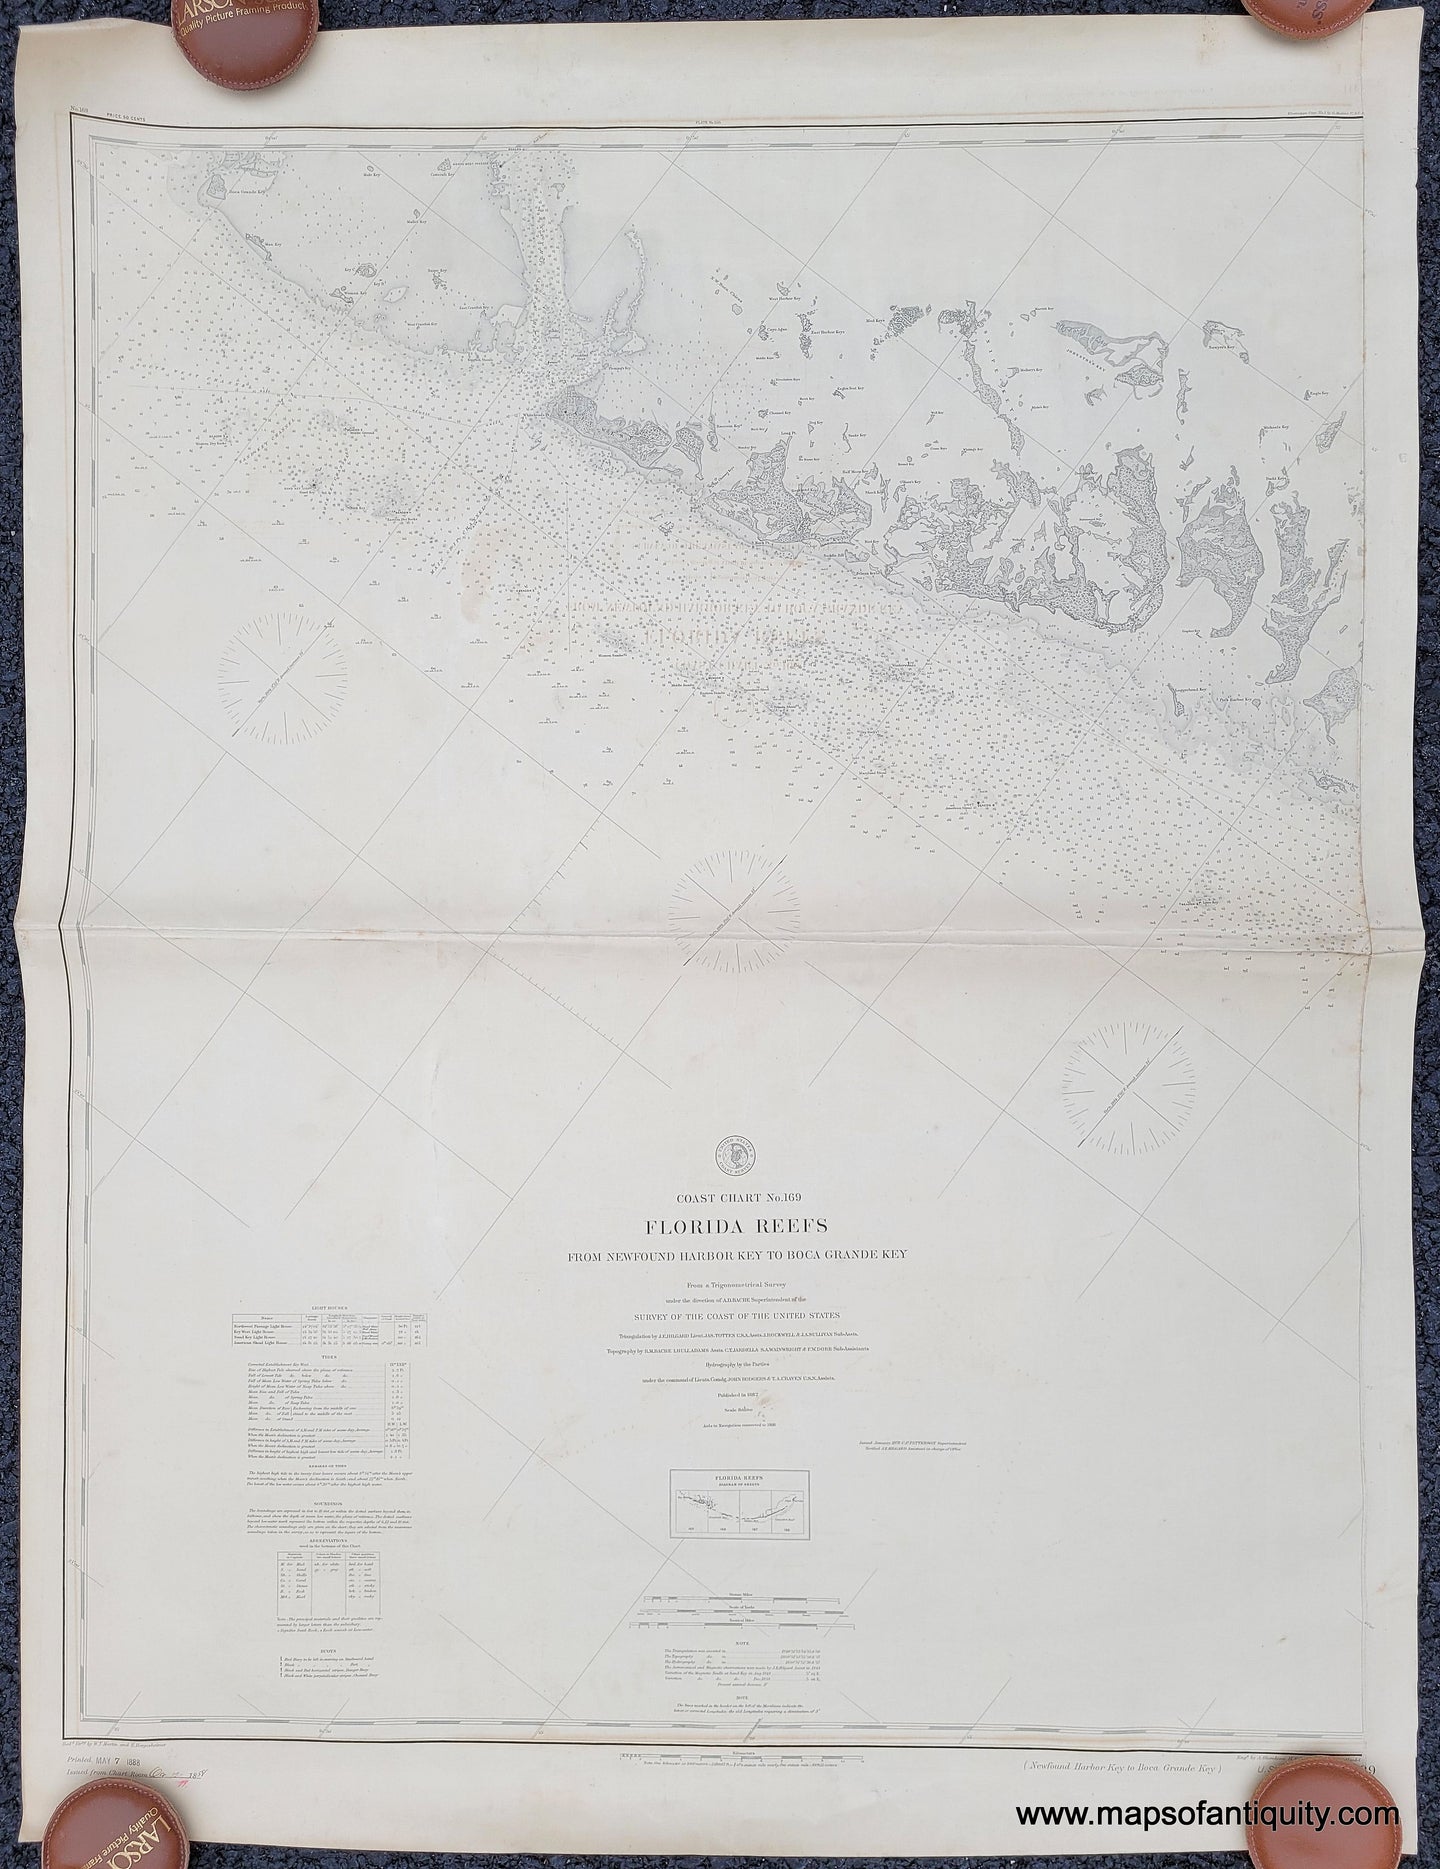 Antique-Black-and-White-Antique-Nautical-Chart-Coastal-Chart-No.-169-Florida-Reefs-from-Newfound-Harbor-to-Boca-Grande-Key-Antique-Nautical-Charts-Florida-1888-U.S.-Coast-Survey-Maps-Of-Antiquity